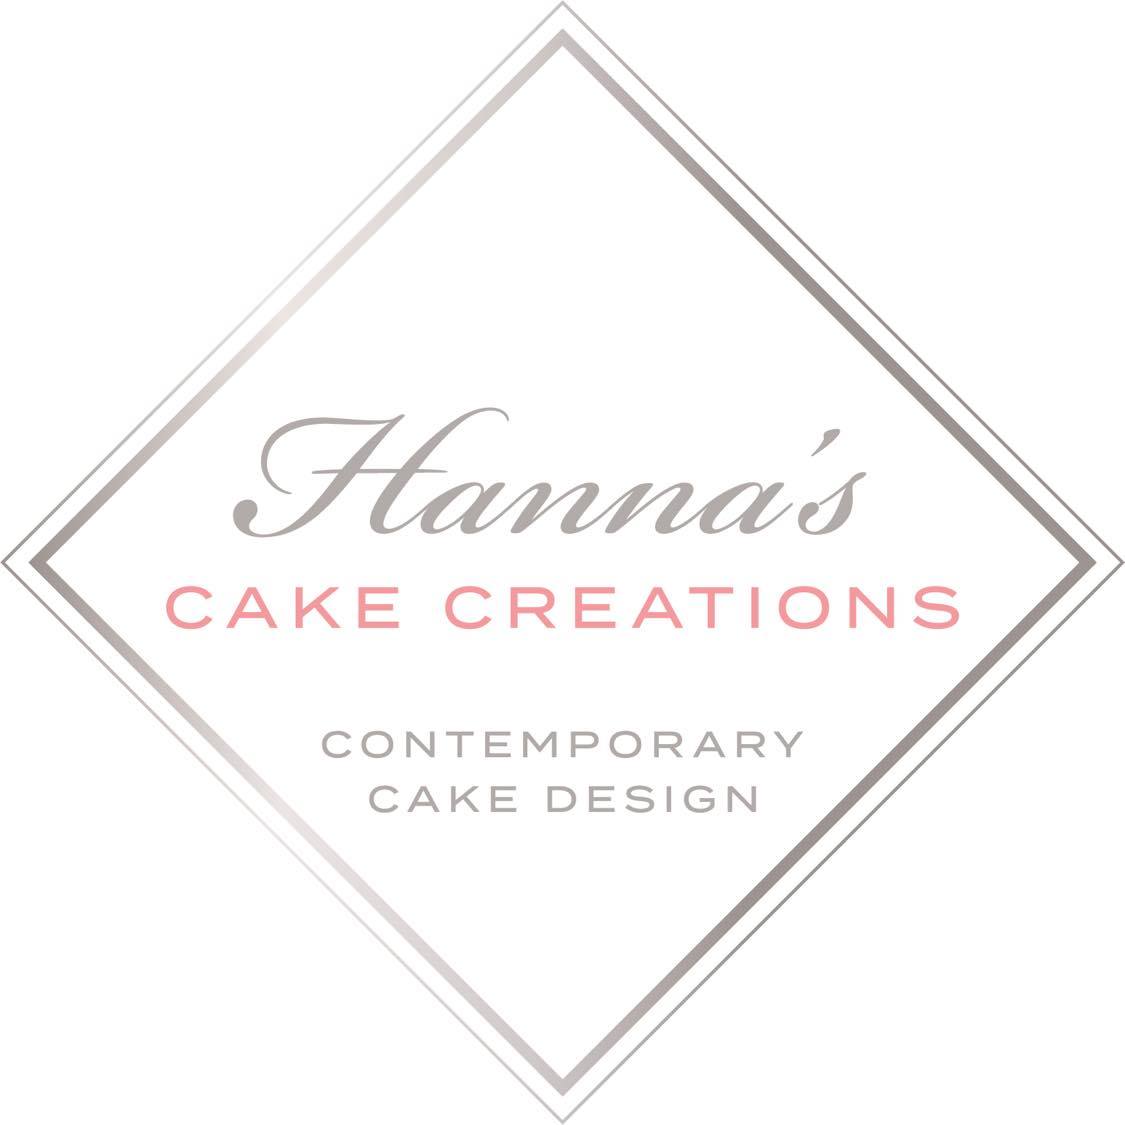 Hanna's cake creations